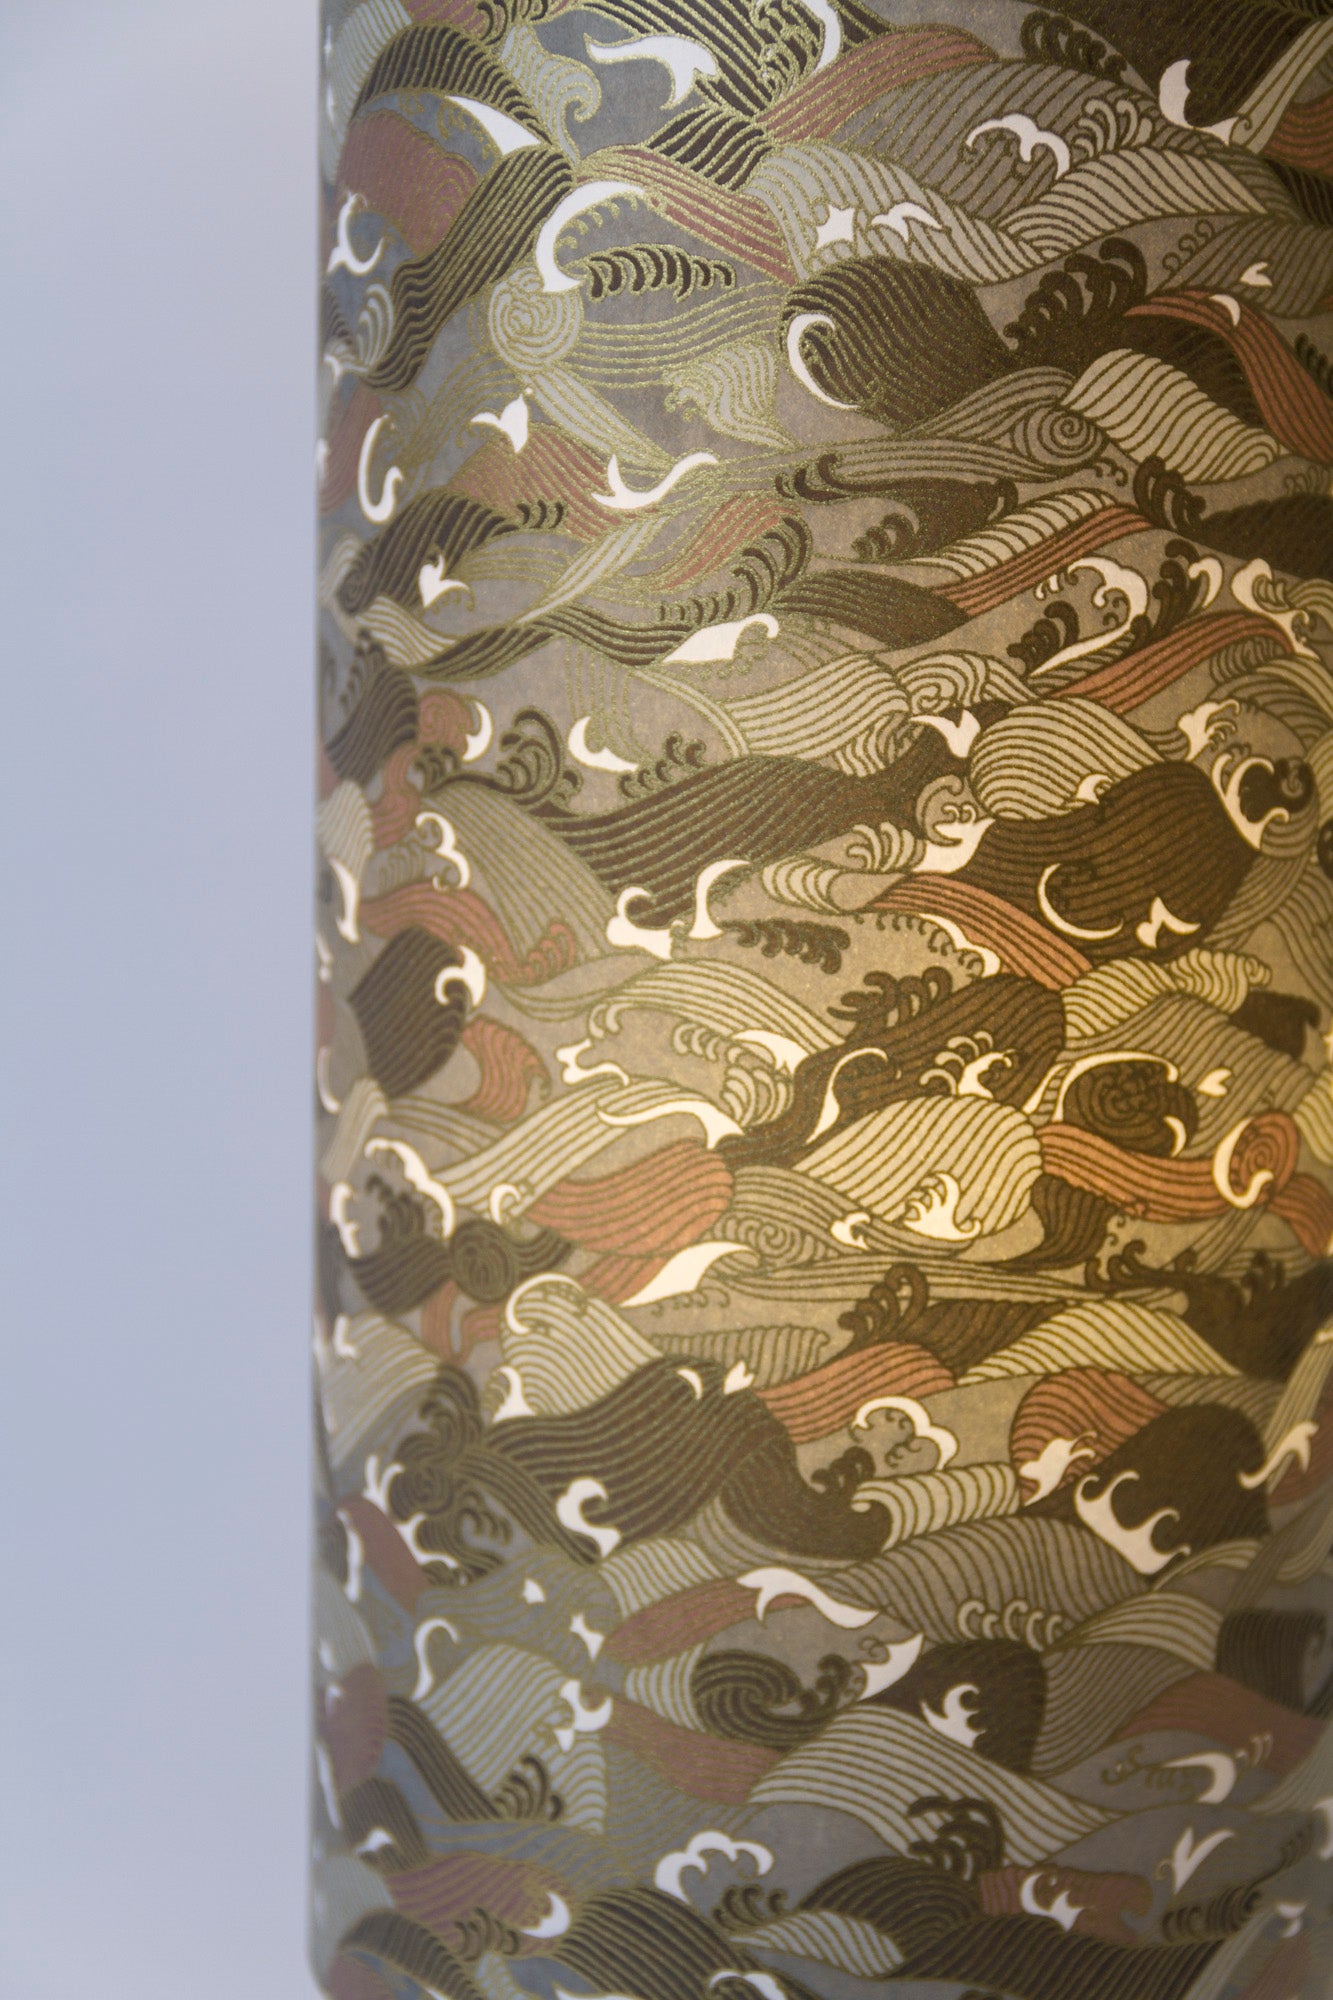 2 Tier Lamp Shade - W03 - Gold Waves on Greys, 30cm x 20cm & 20cm x 15cm